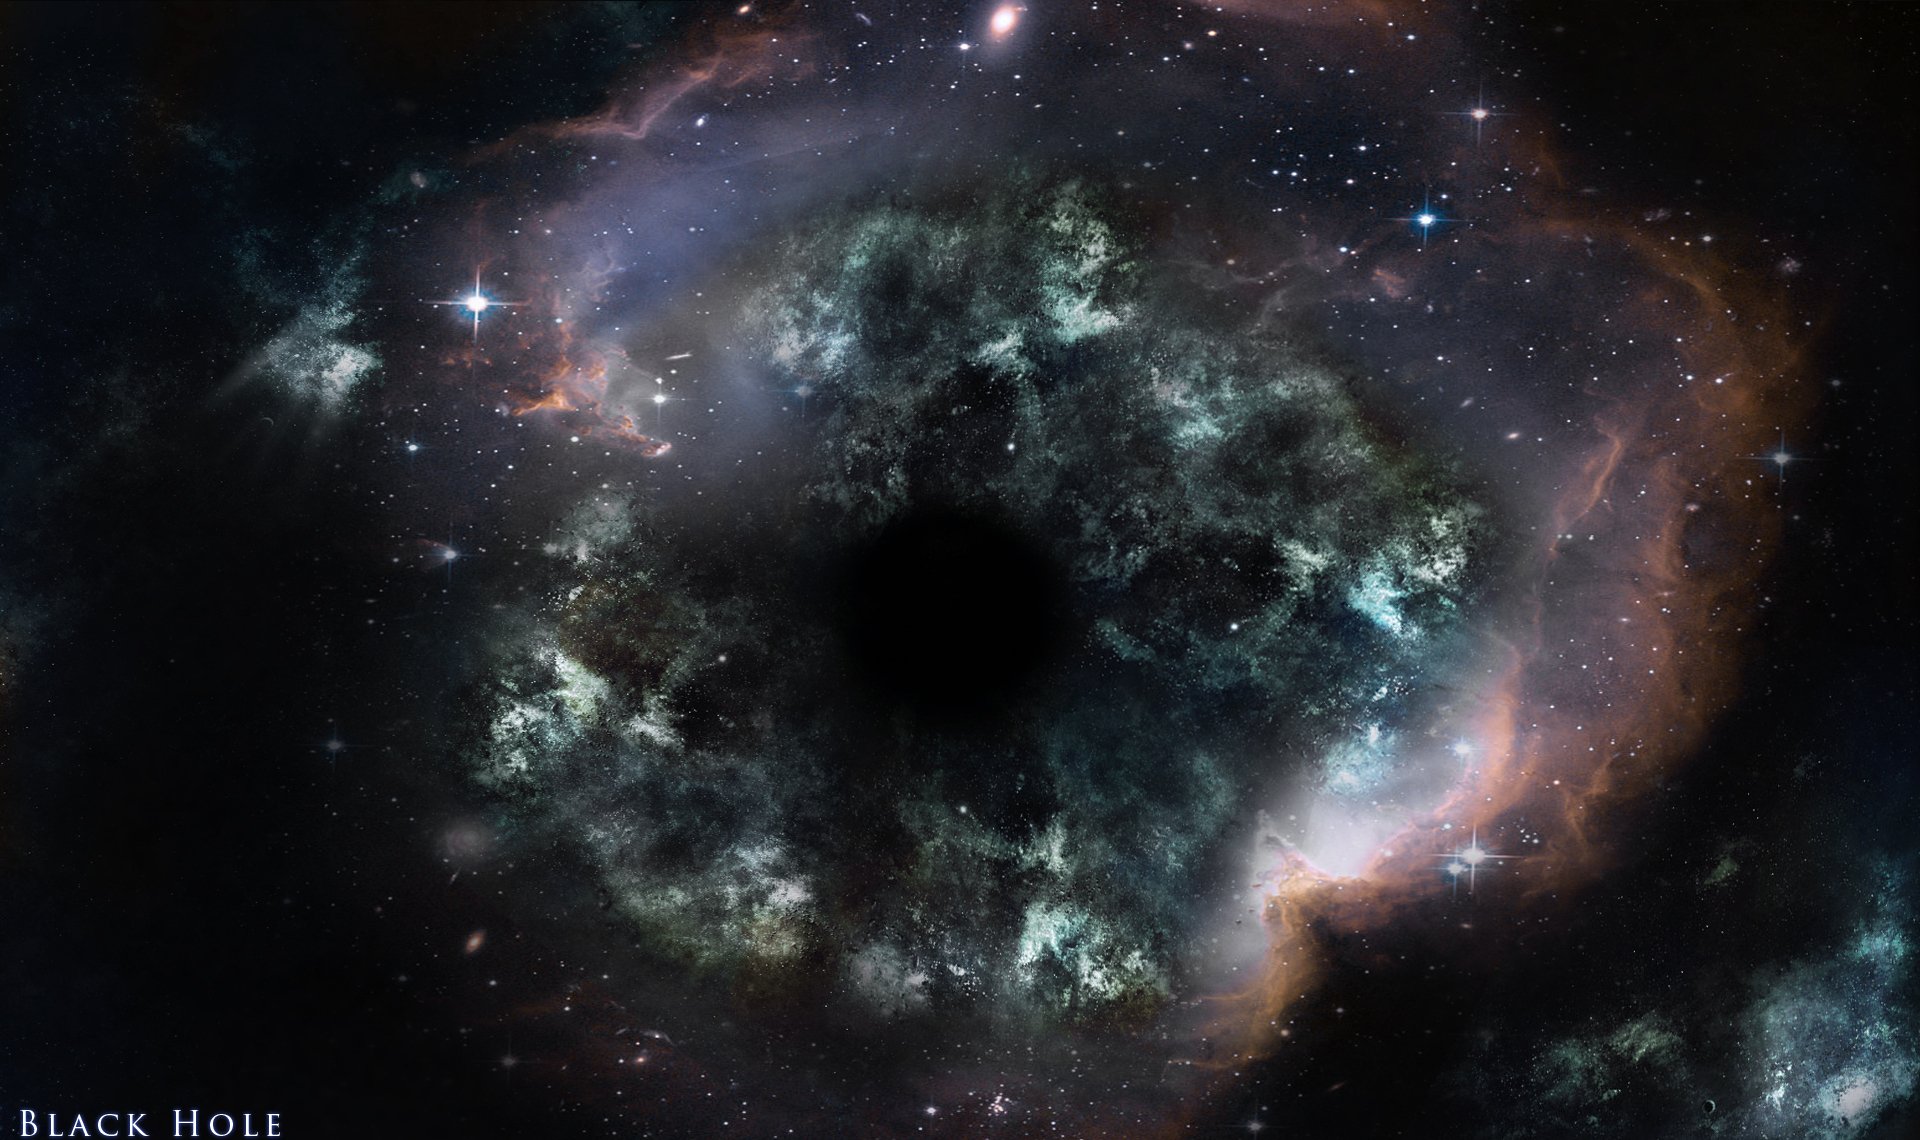 blackhole gloryhole streach